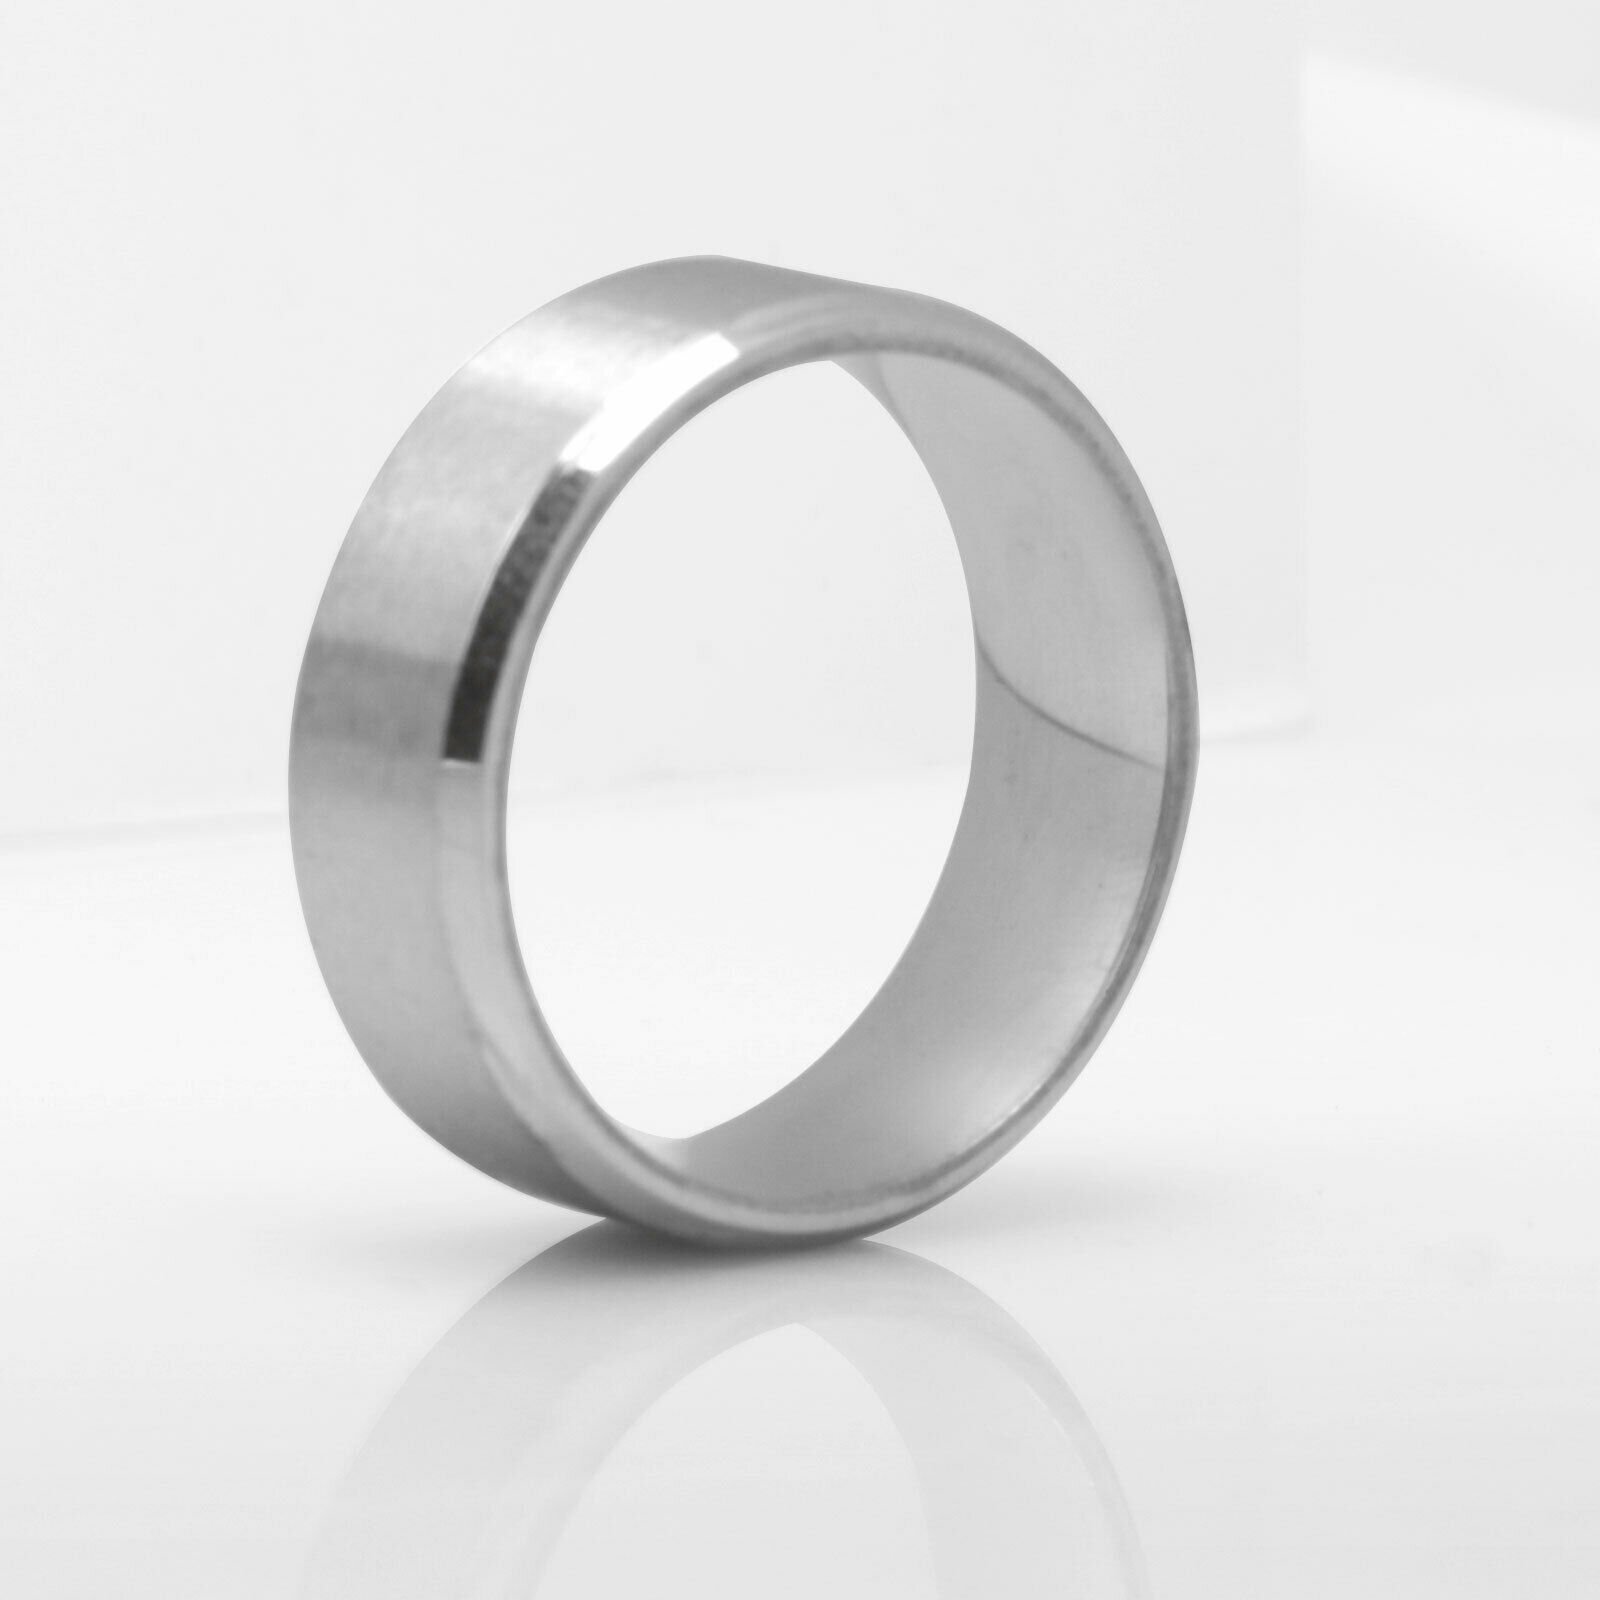 4.5 Gemini Groom & Bride Beveled Edge Matching Couple Wedding Anniversary Titanium Ring Set Width 8mm & 5mm Men Ring Size 12 Women Ring Size 